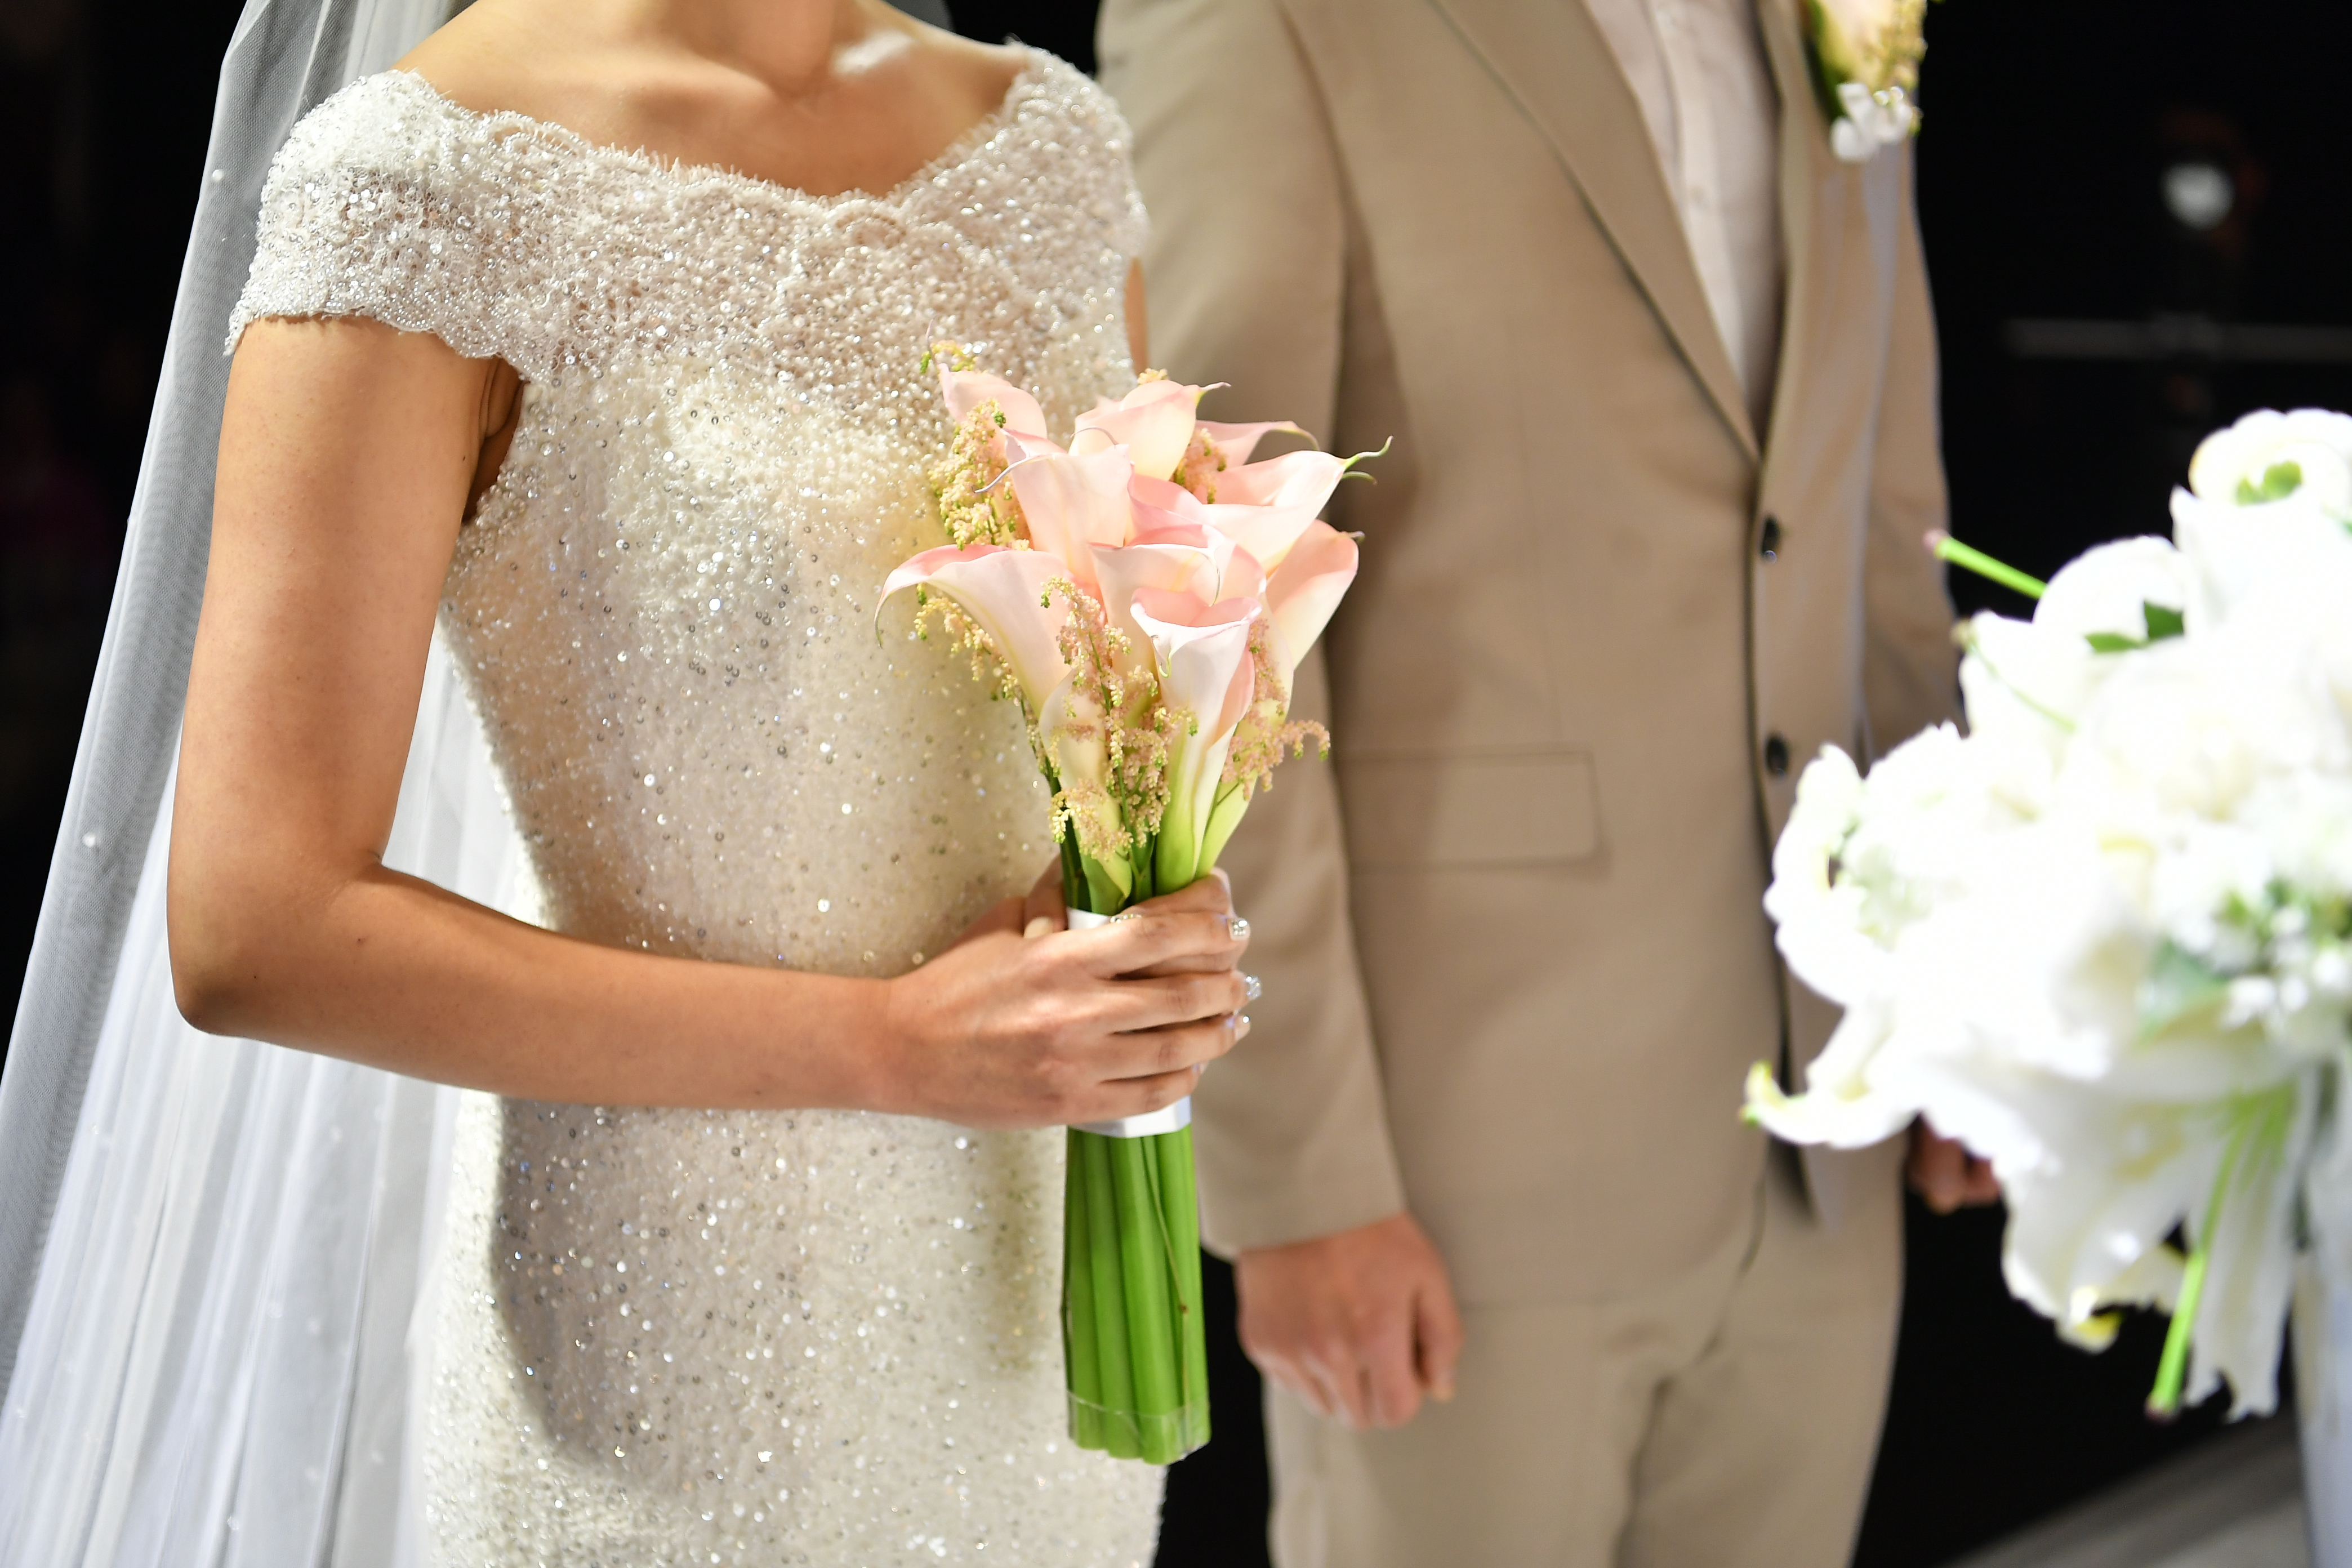 Wedding | Source: Shutterstock